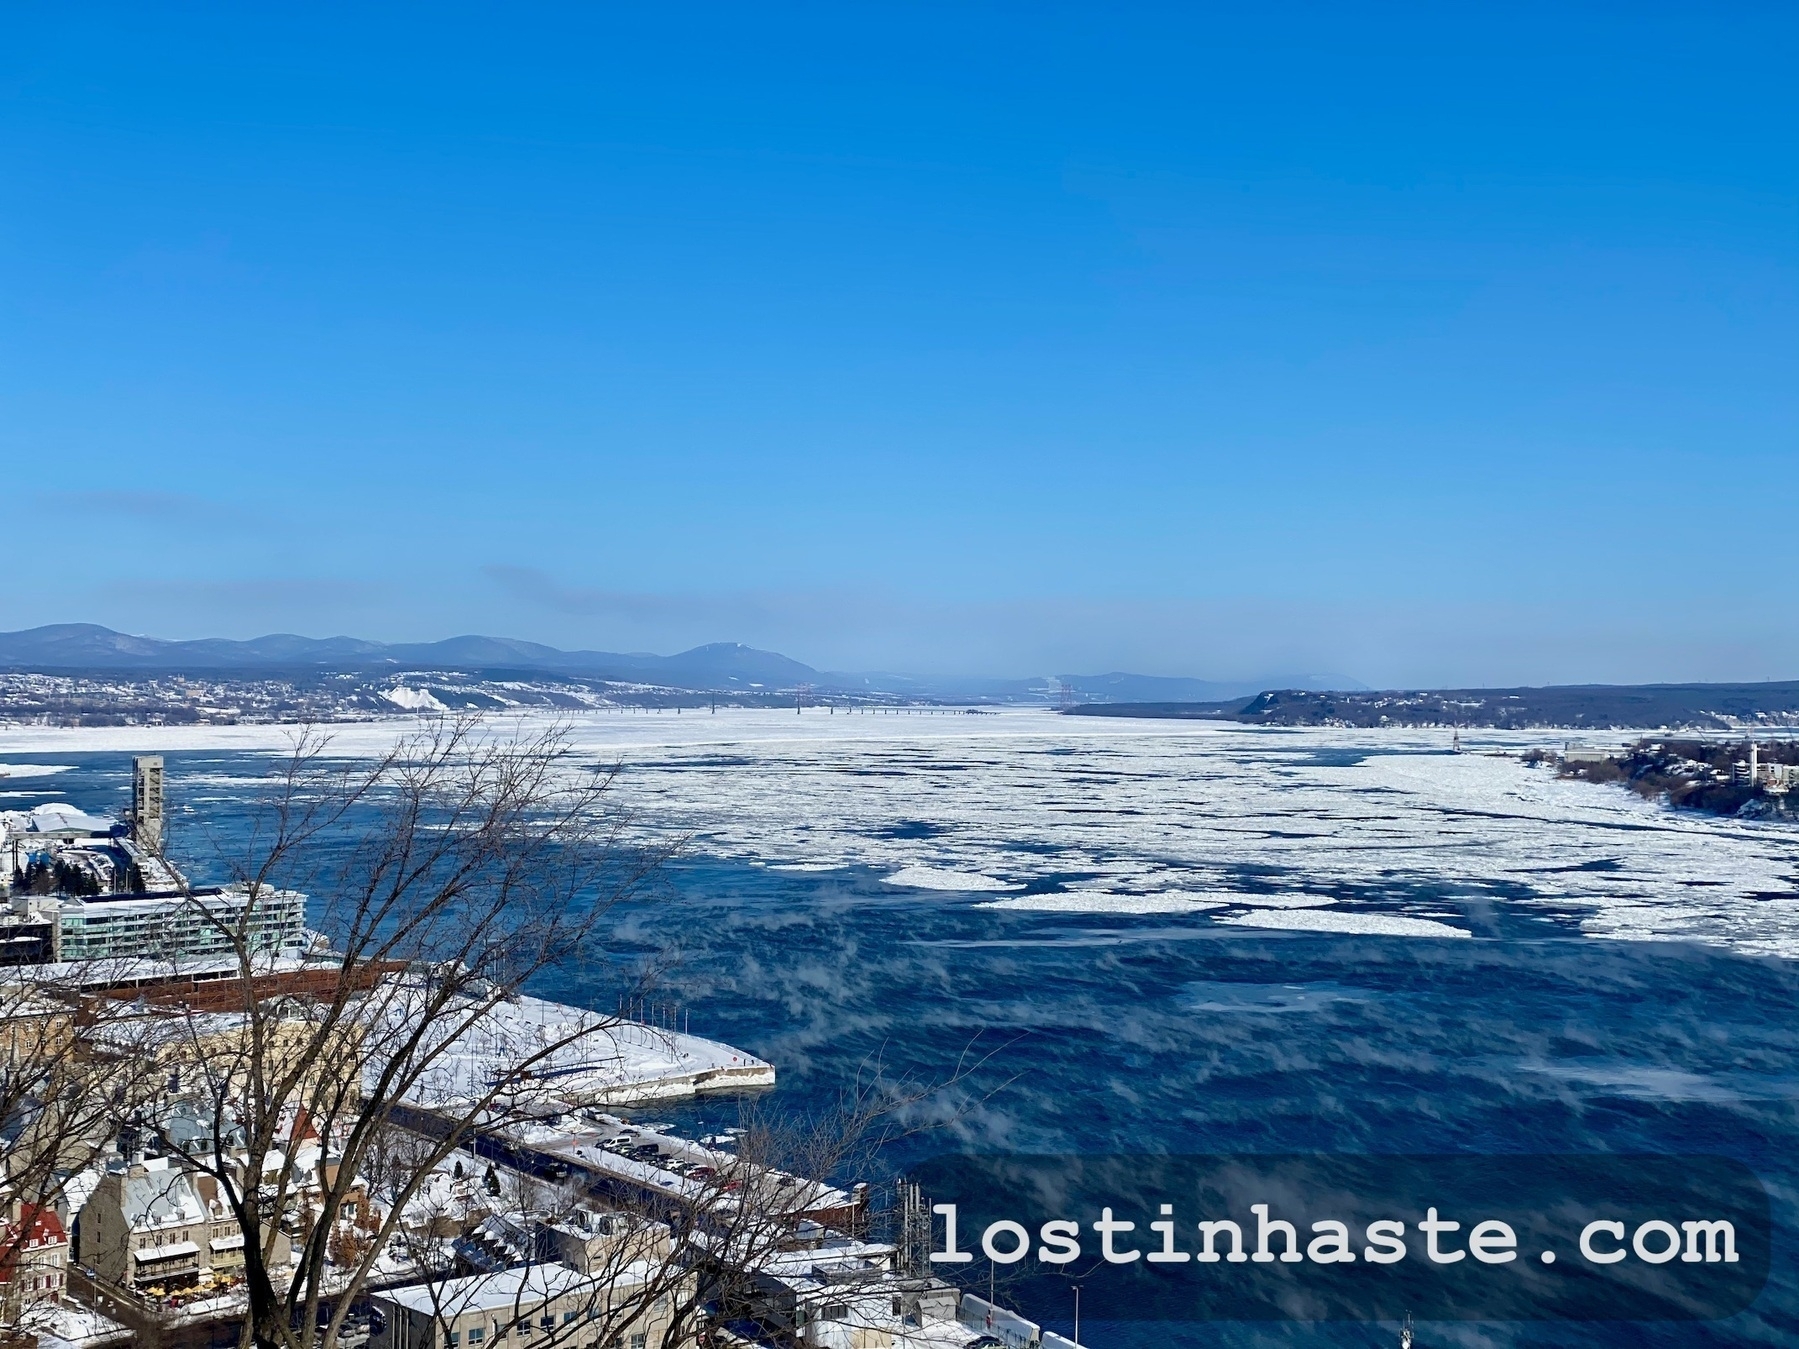 A frozen river flows through a cityscape against a backdrop of mountains under a clear blue sky. Text: lostinhaste.com.